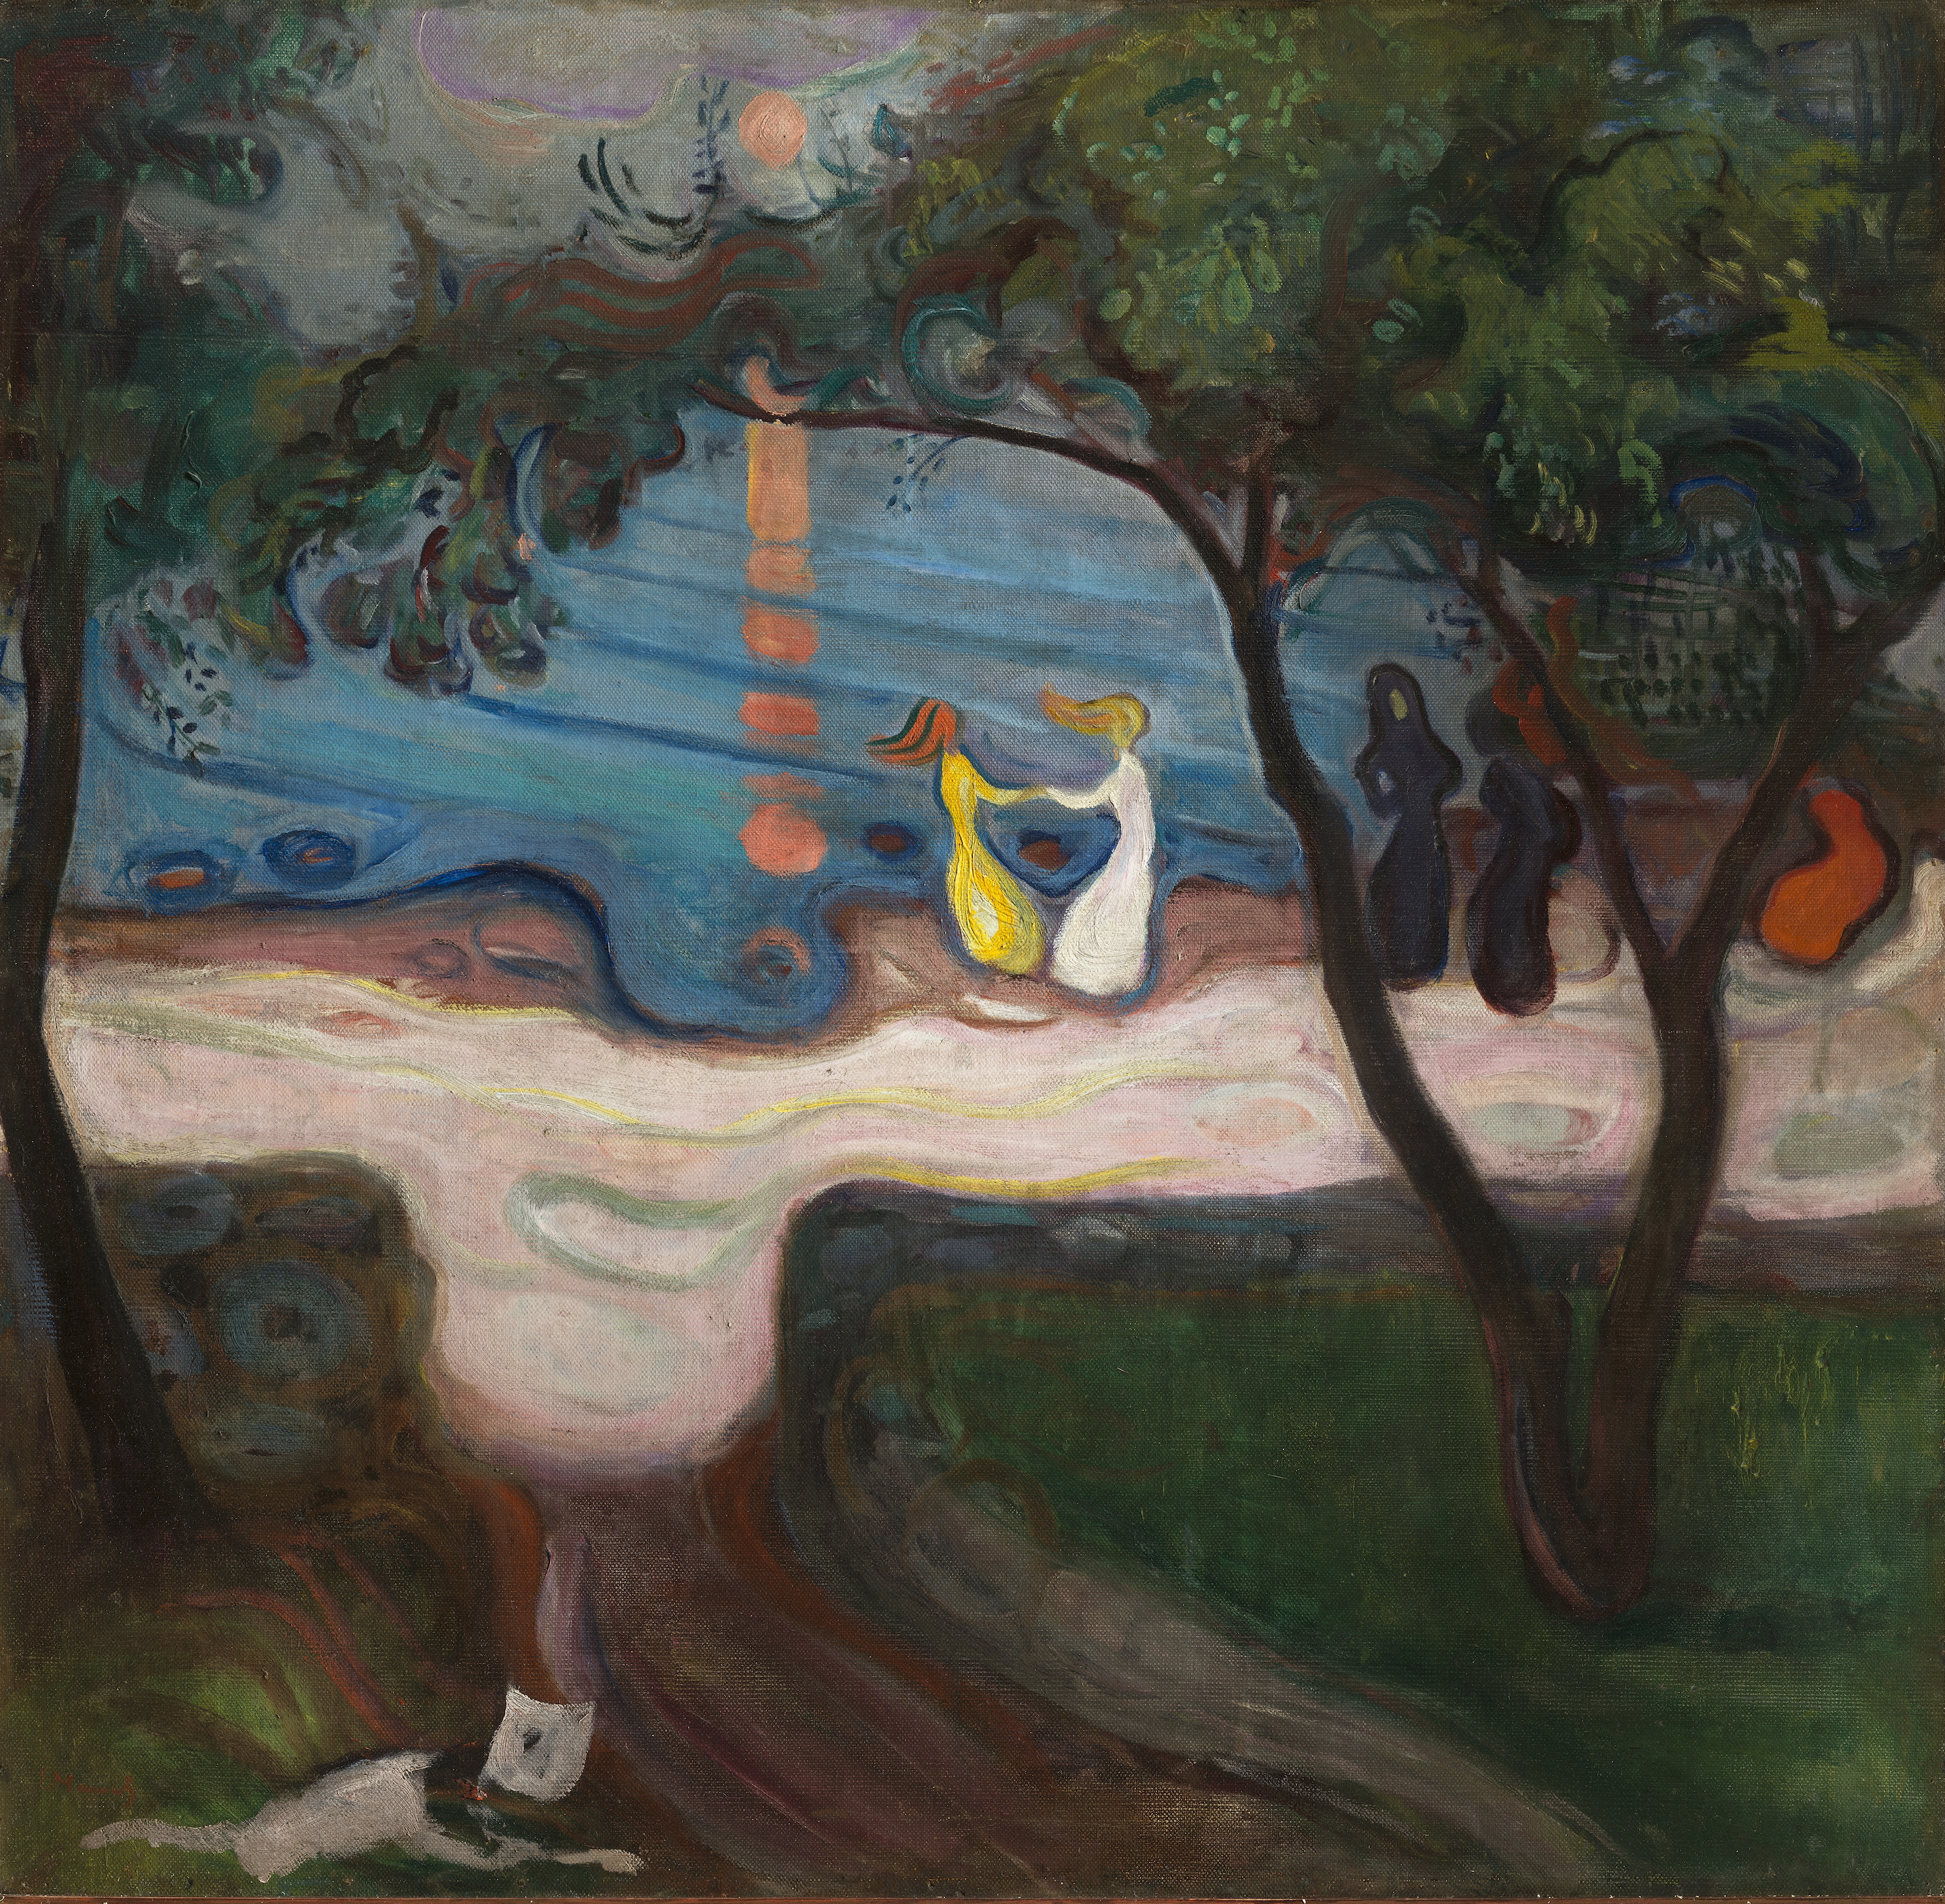 Kıyıda Dans (orig. "Dancing on a Shore") by Edvard Munch - 1900 - 95,5 x 98,5 cm 